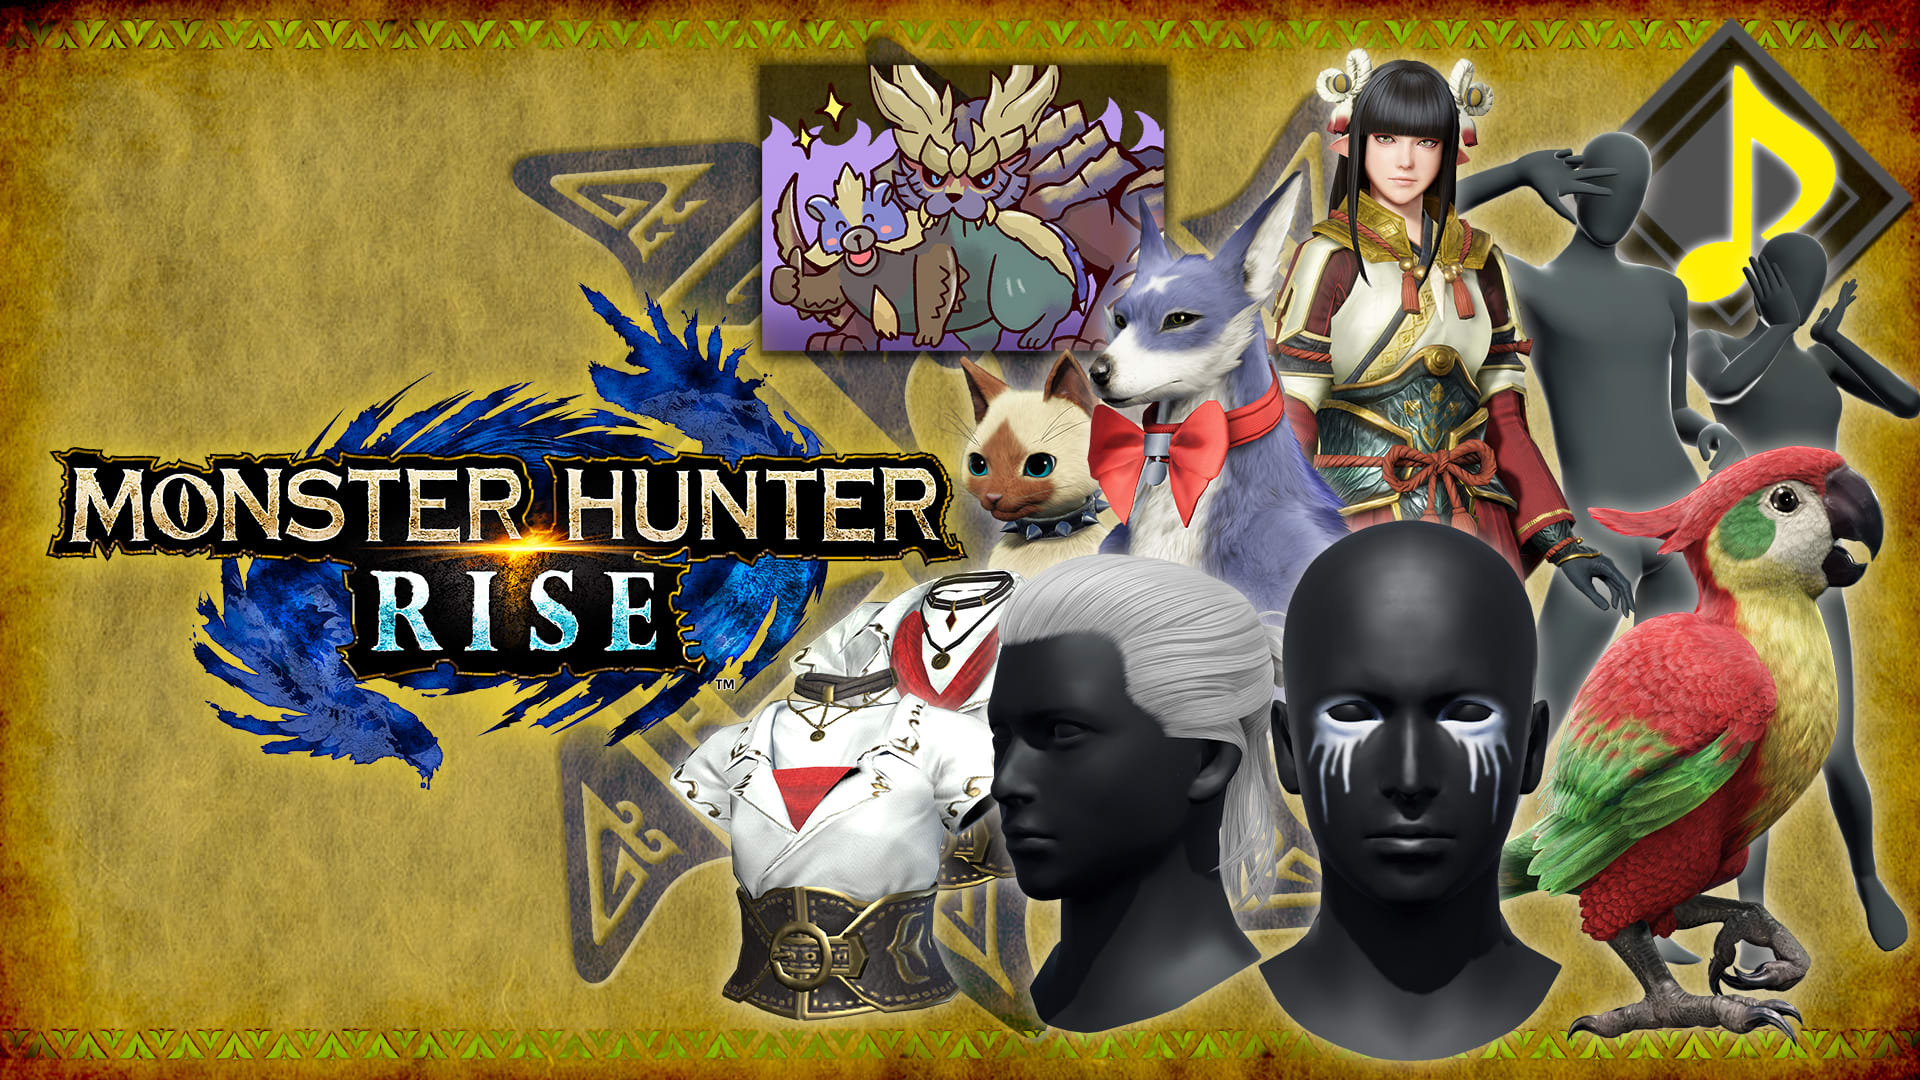 Pack 2 de DLC de Monster Hunter Rise